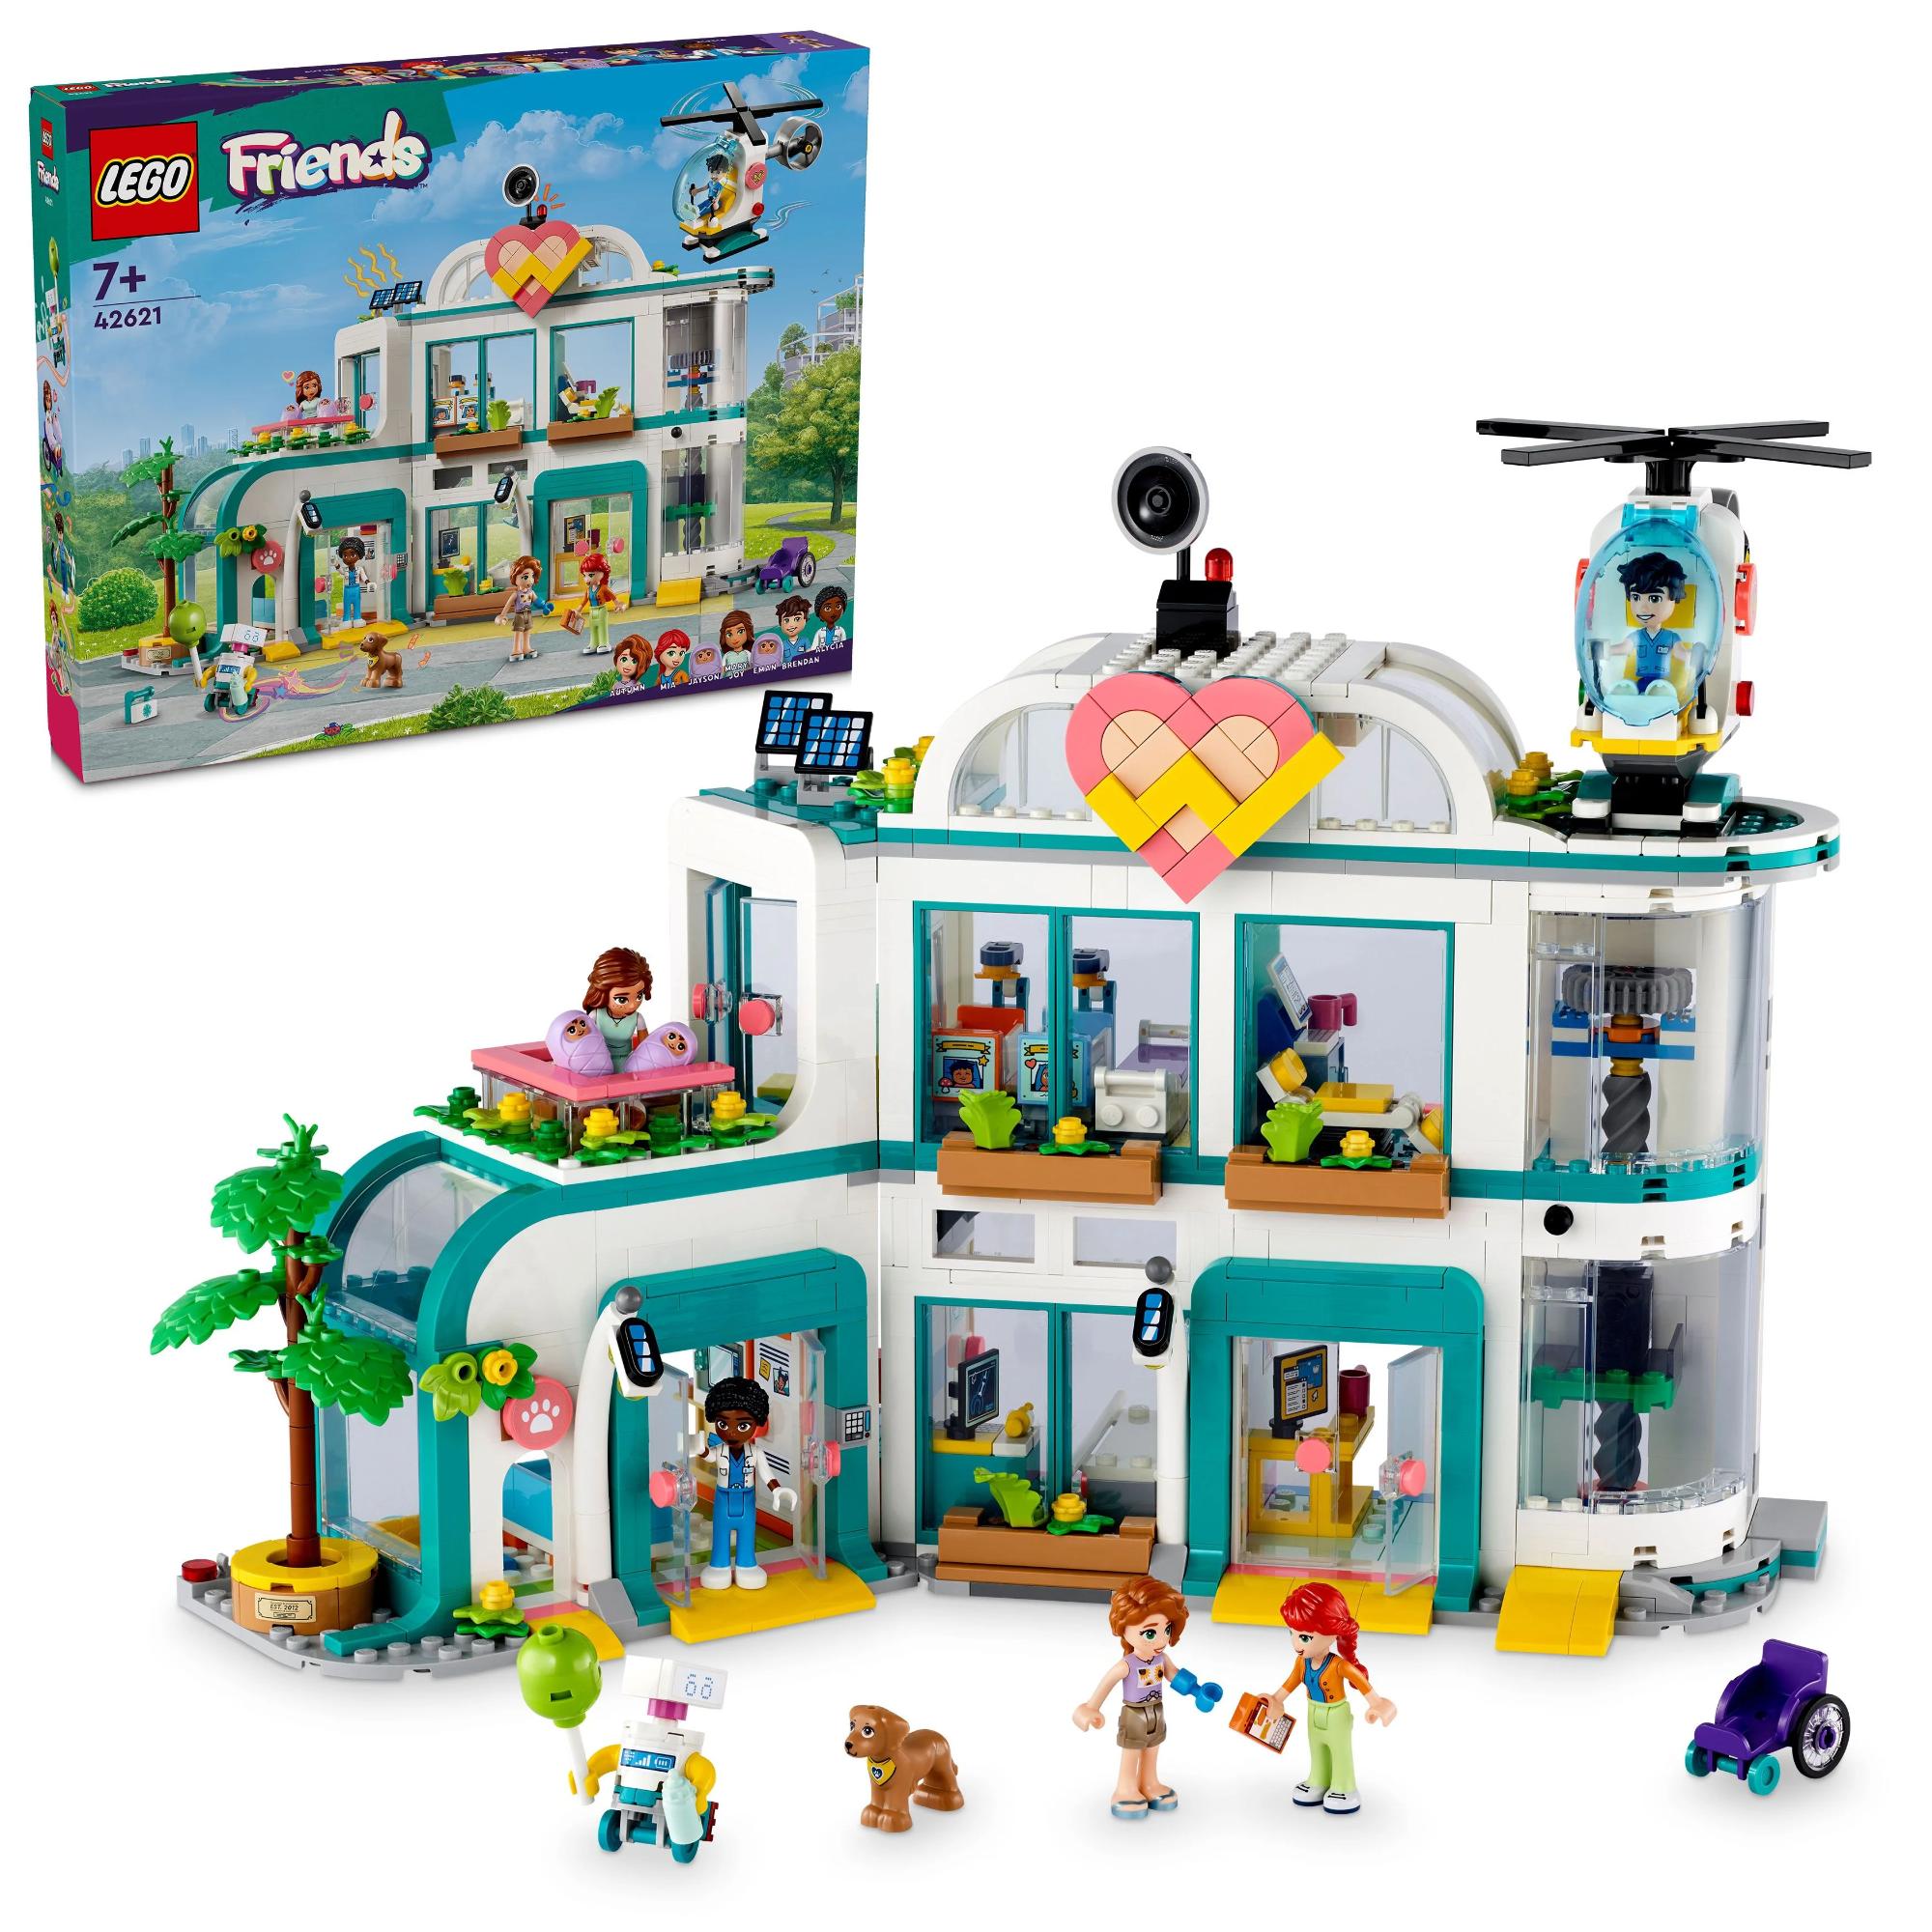 LEGO Friends: Heartlake City Hospital (42621)